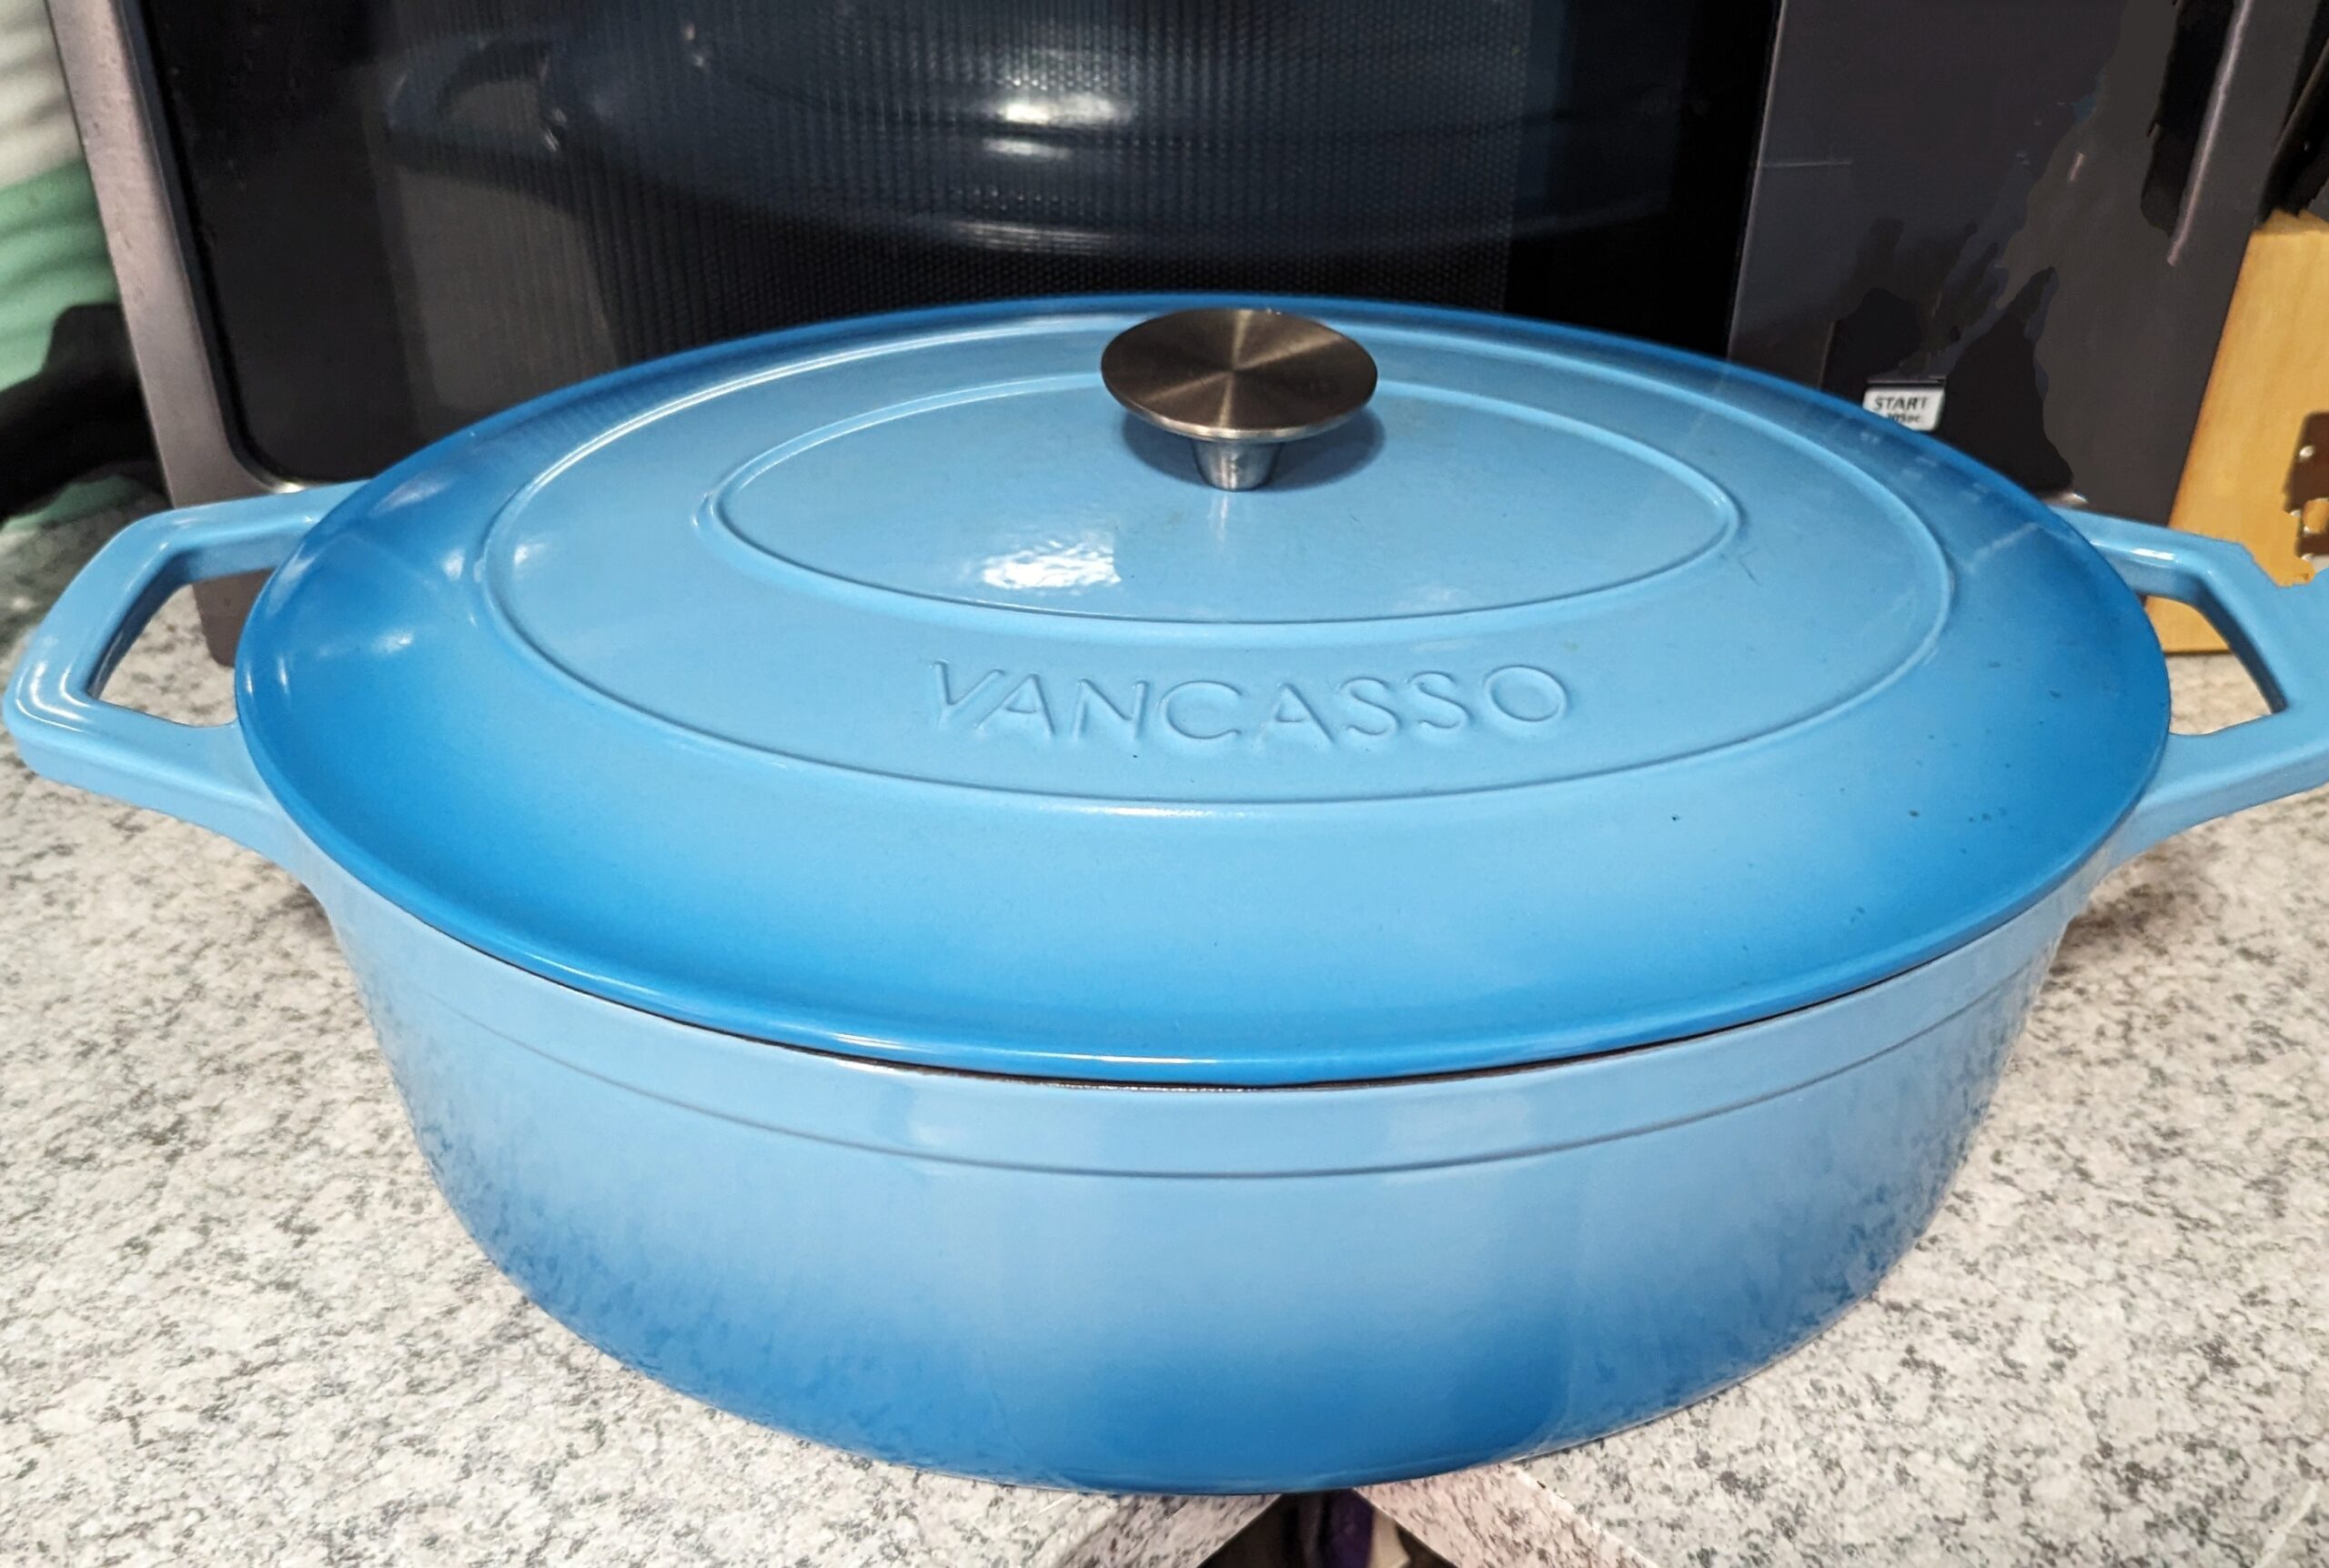 Vancasso Non-Stick Enameled Cast Iron Oval Dutch Oven & Reviews